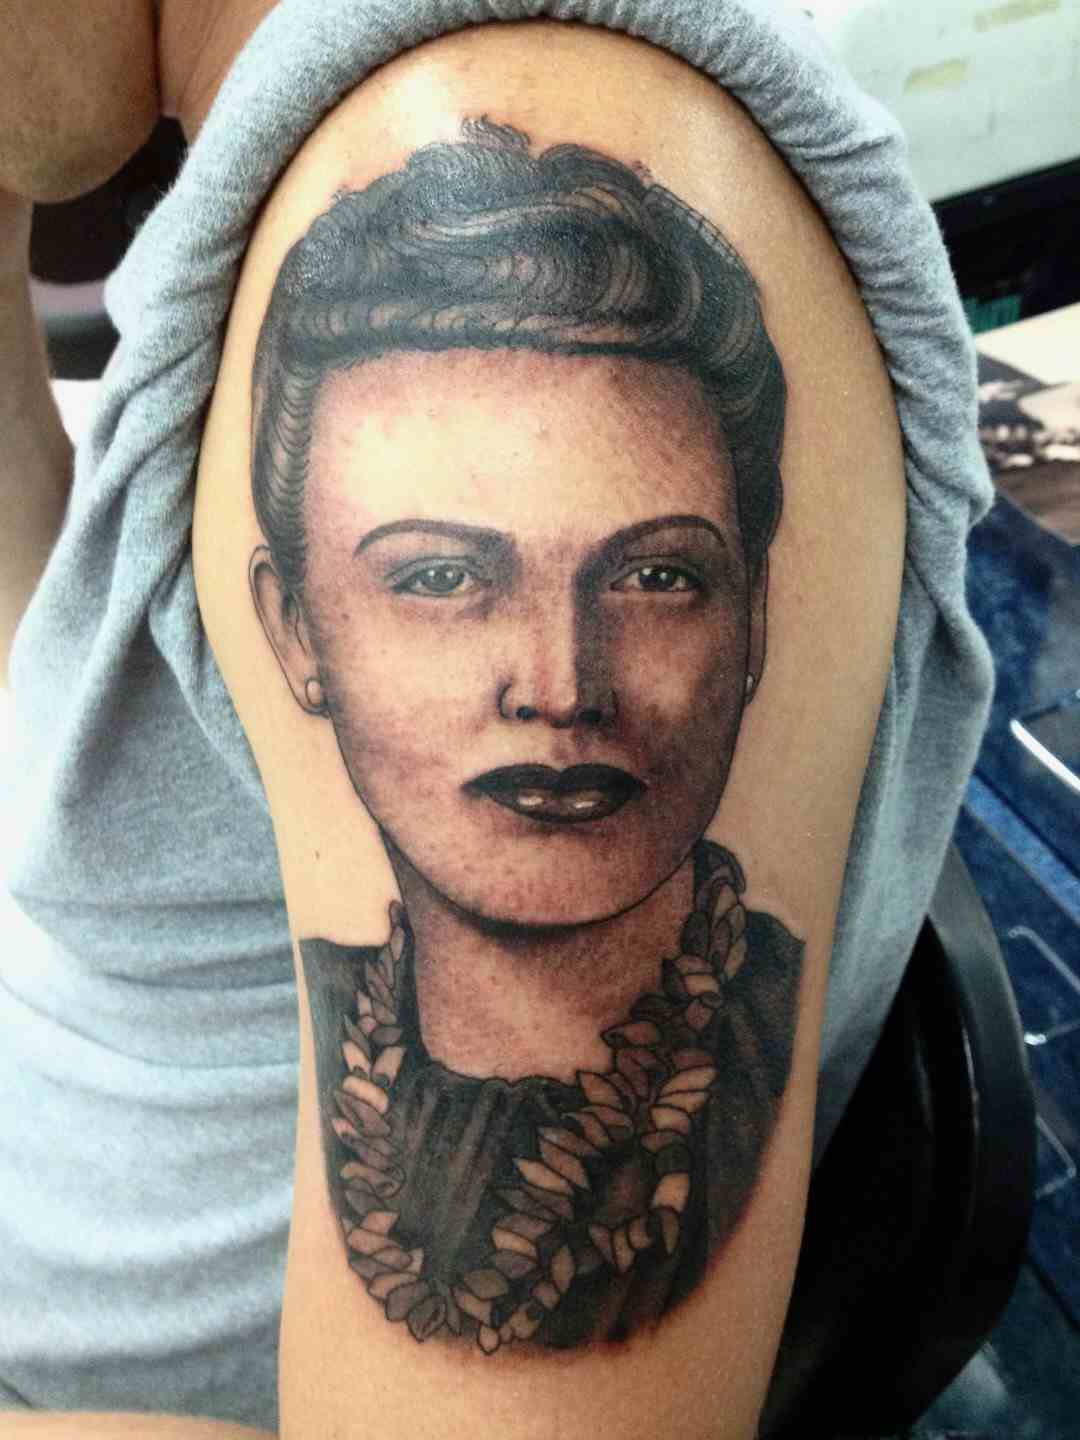 Female portrait tattoo